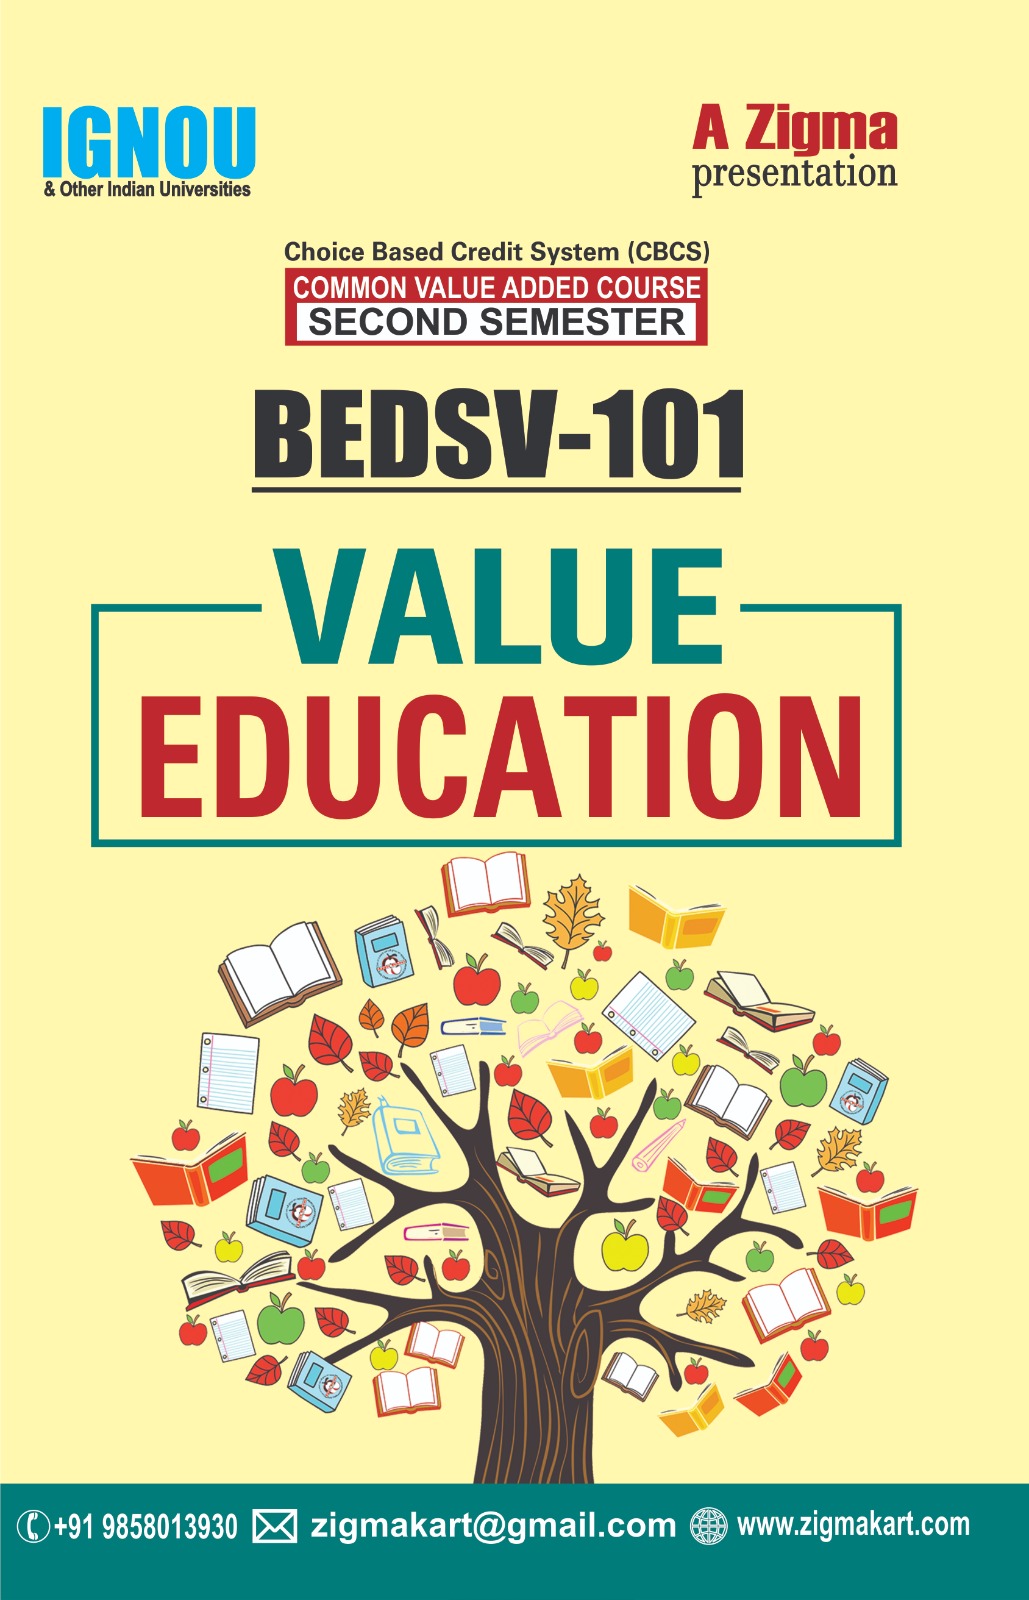 IGNOU BEDSV-101 VALUE EDUCATION